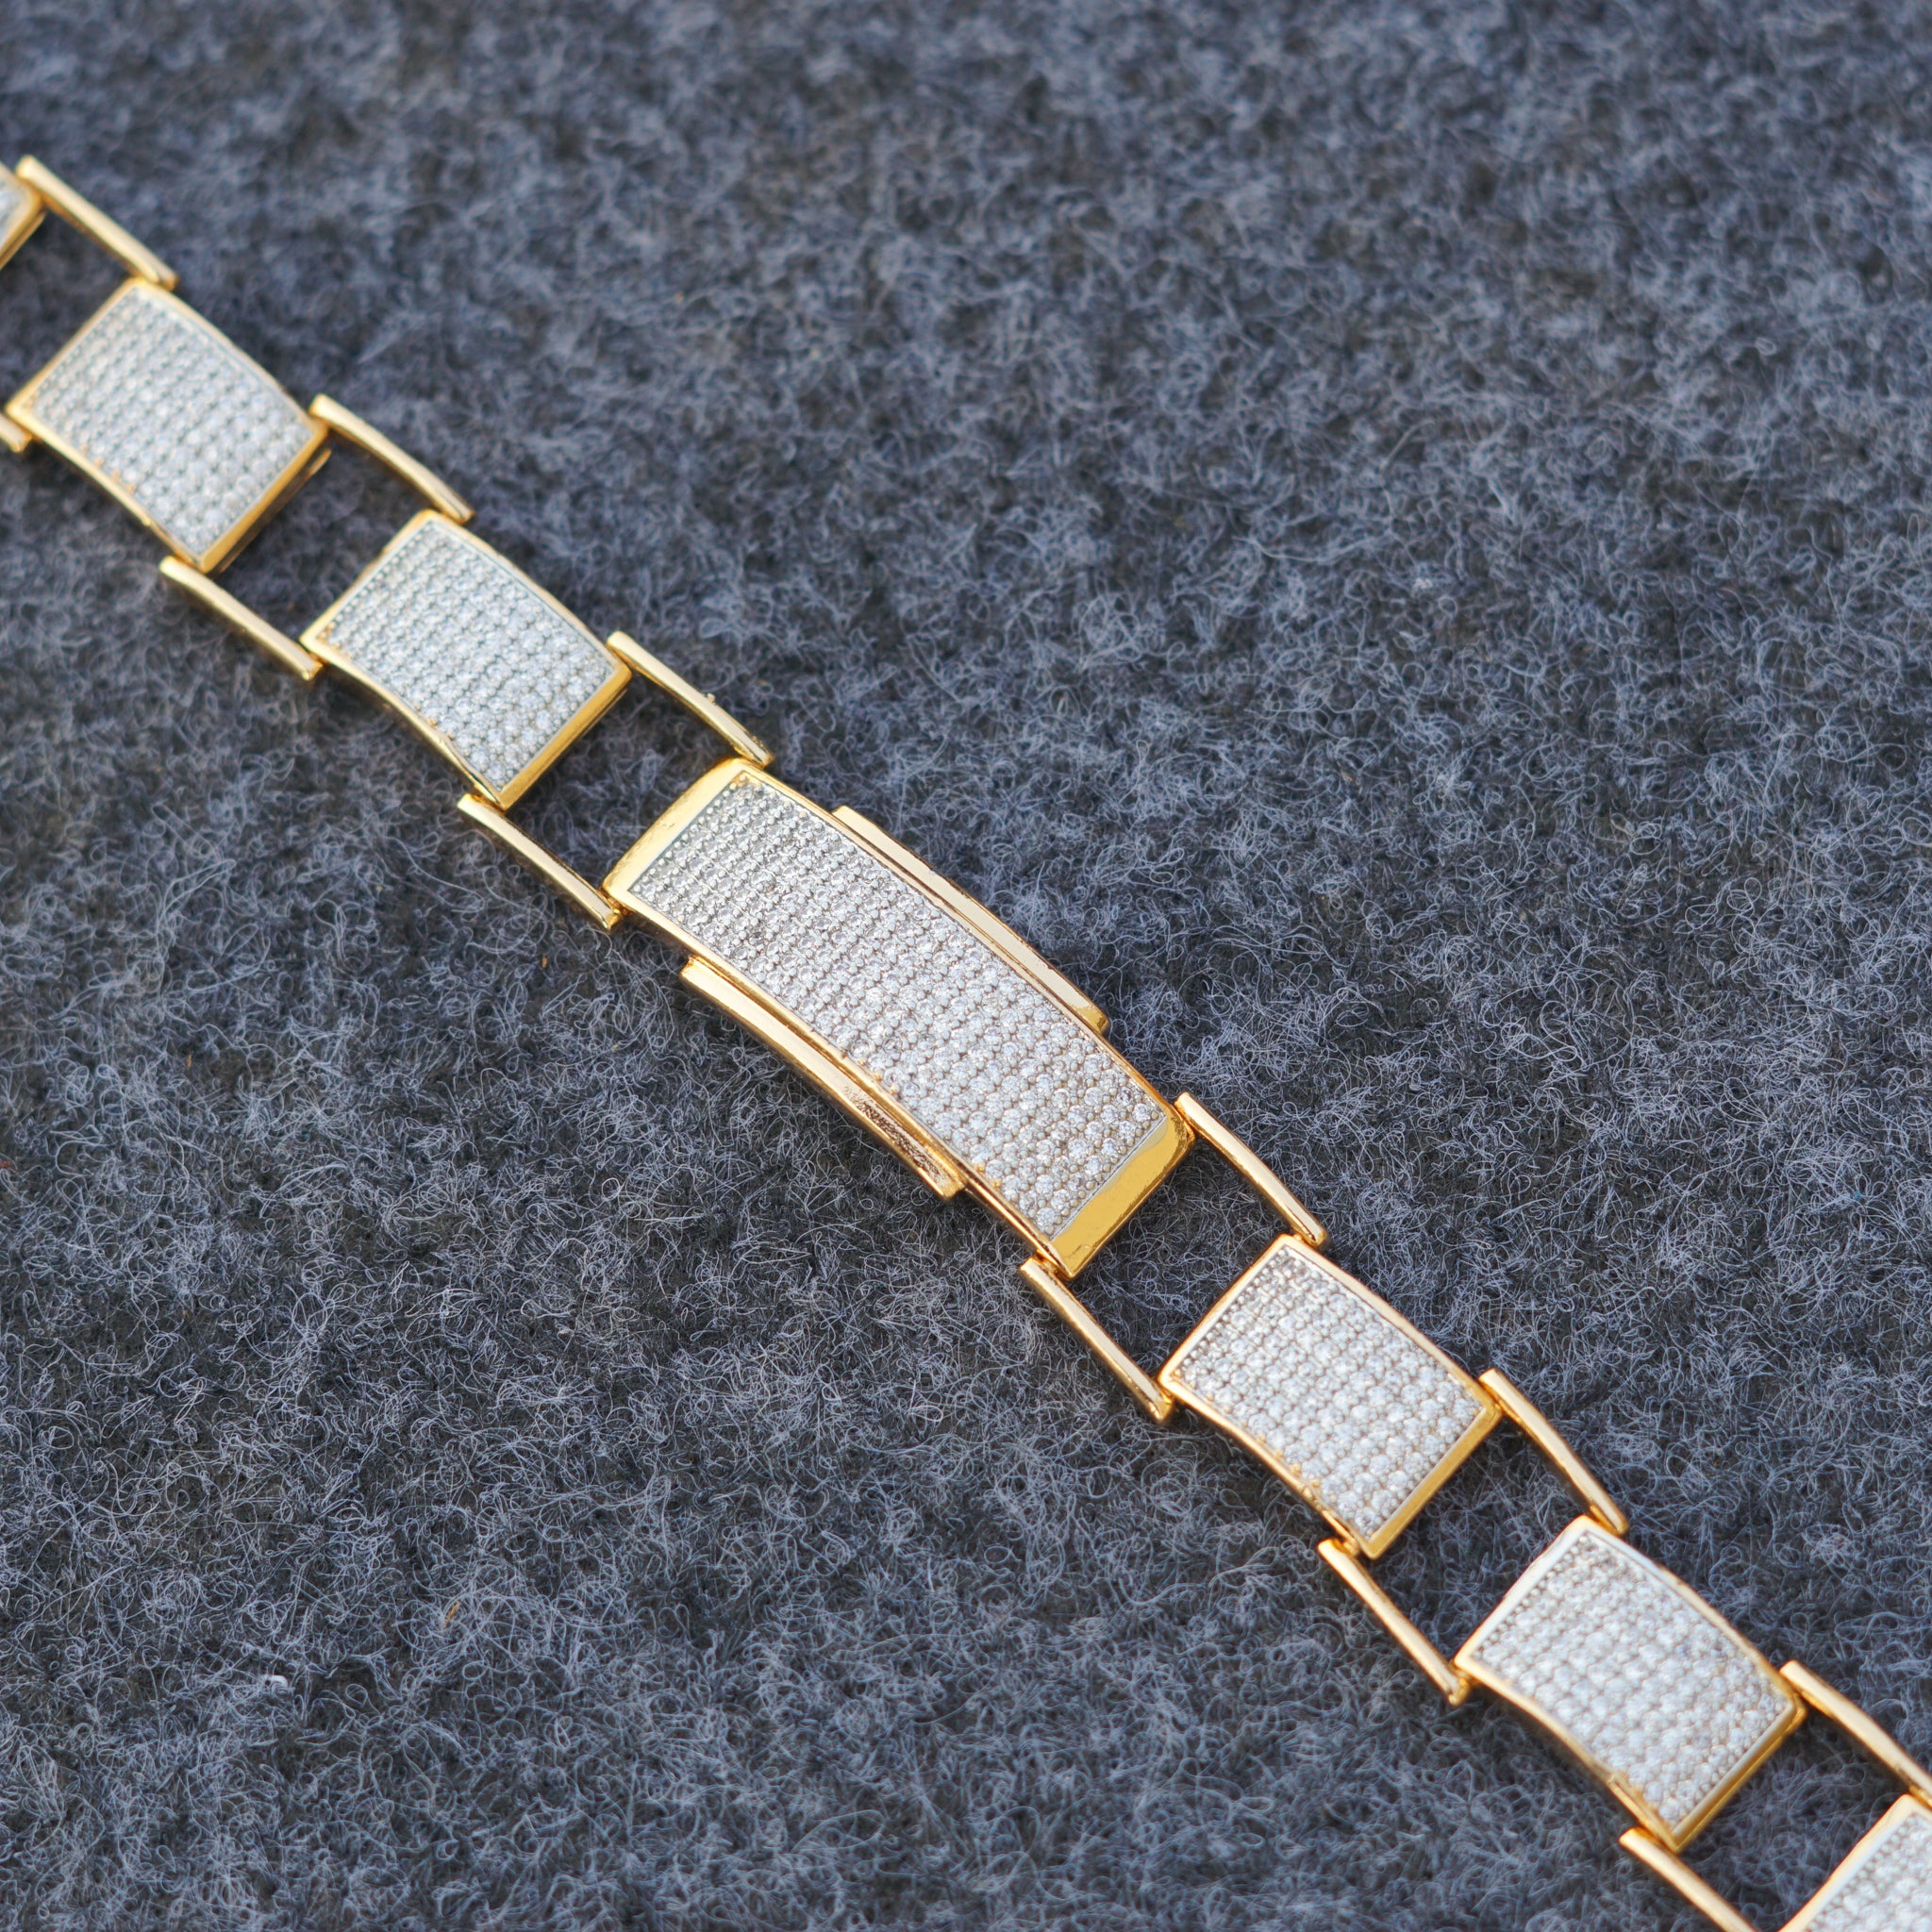 Venus Gold Diamond Loose Bracelet